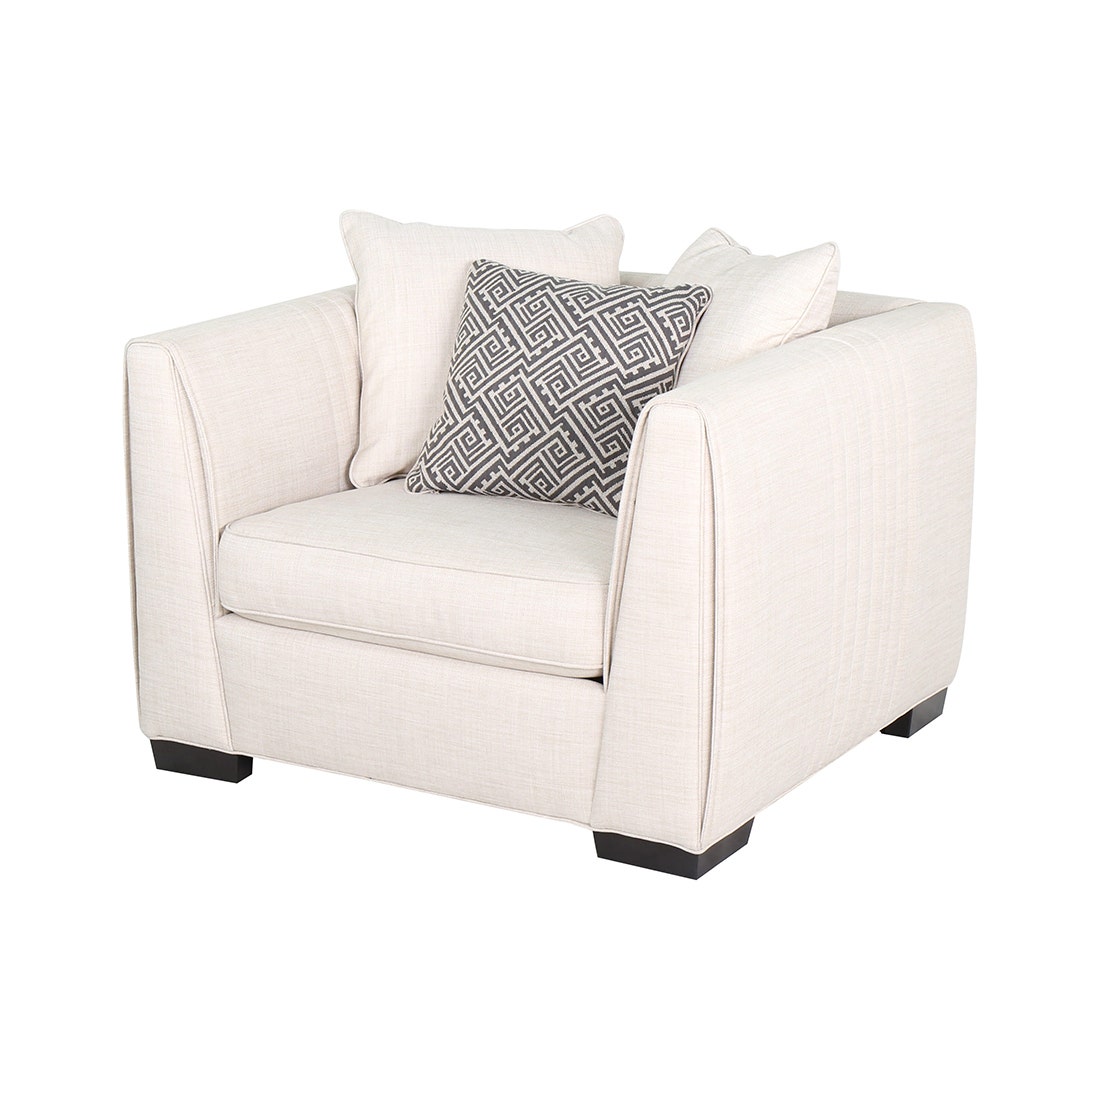 Hertero Fabric Sofa 1 Seater - Cream